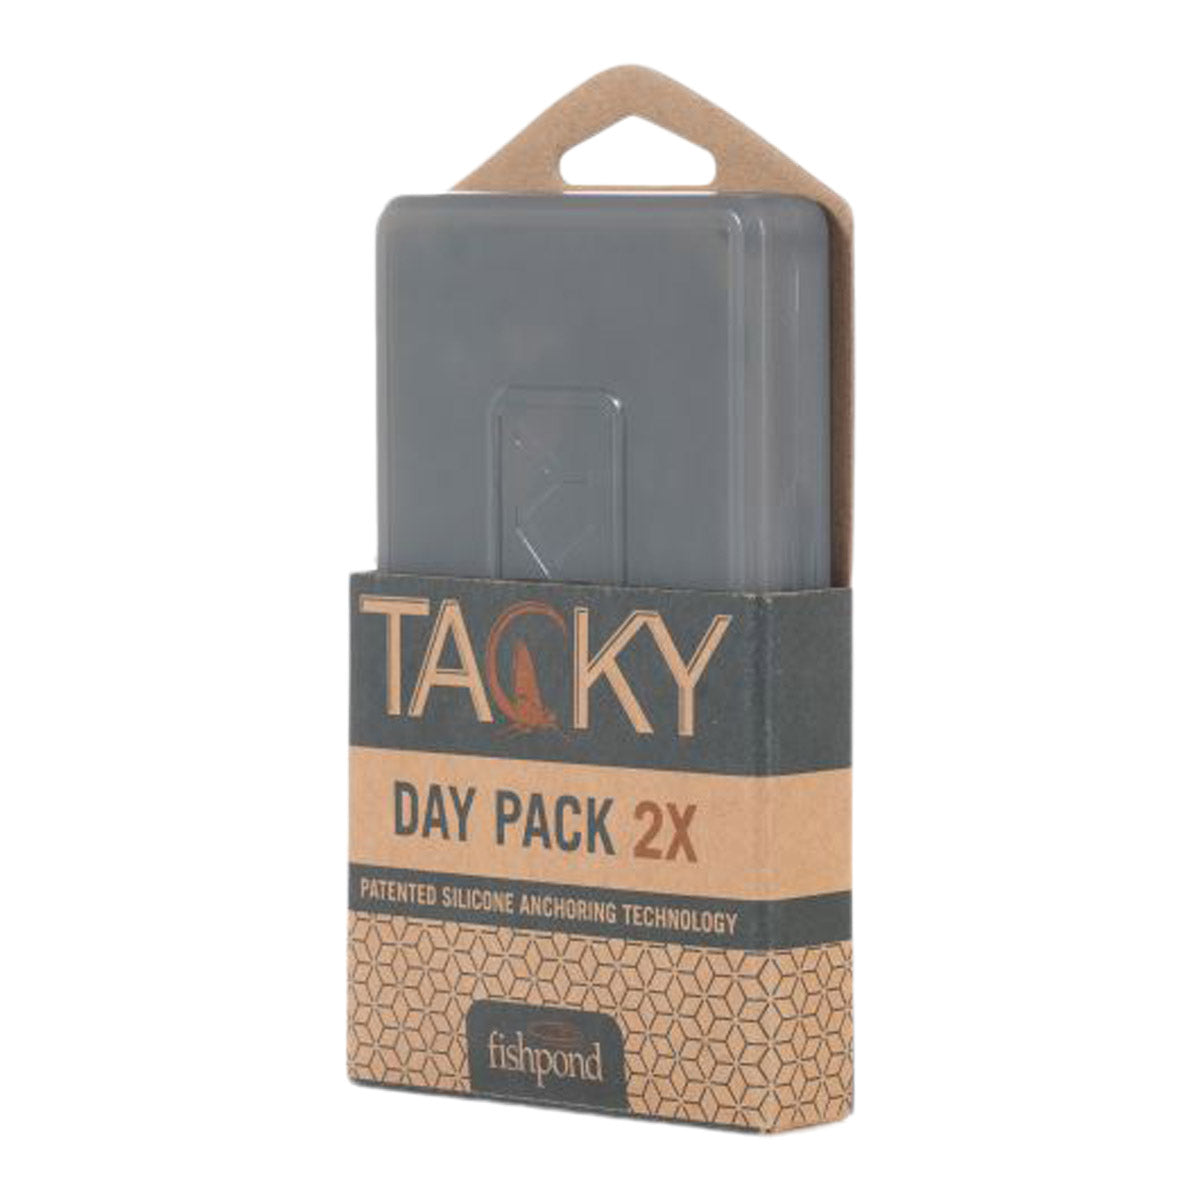 Fishpond Tacky 2X Daypack Fly Box